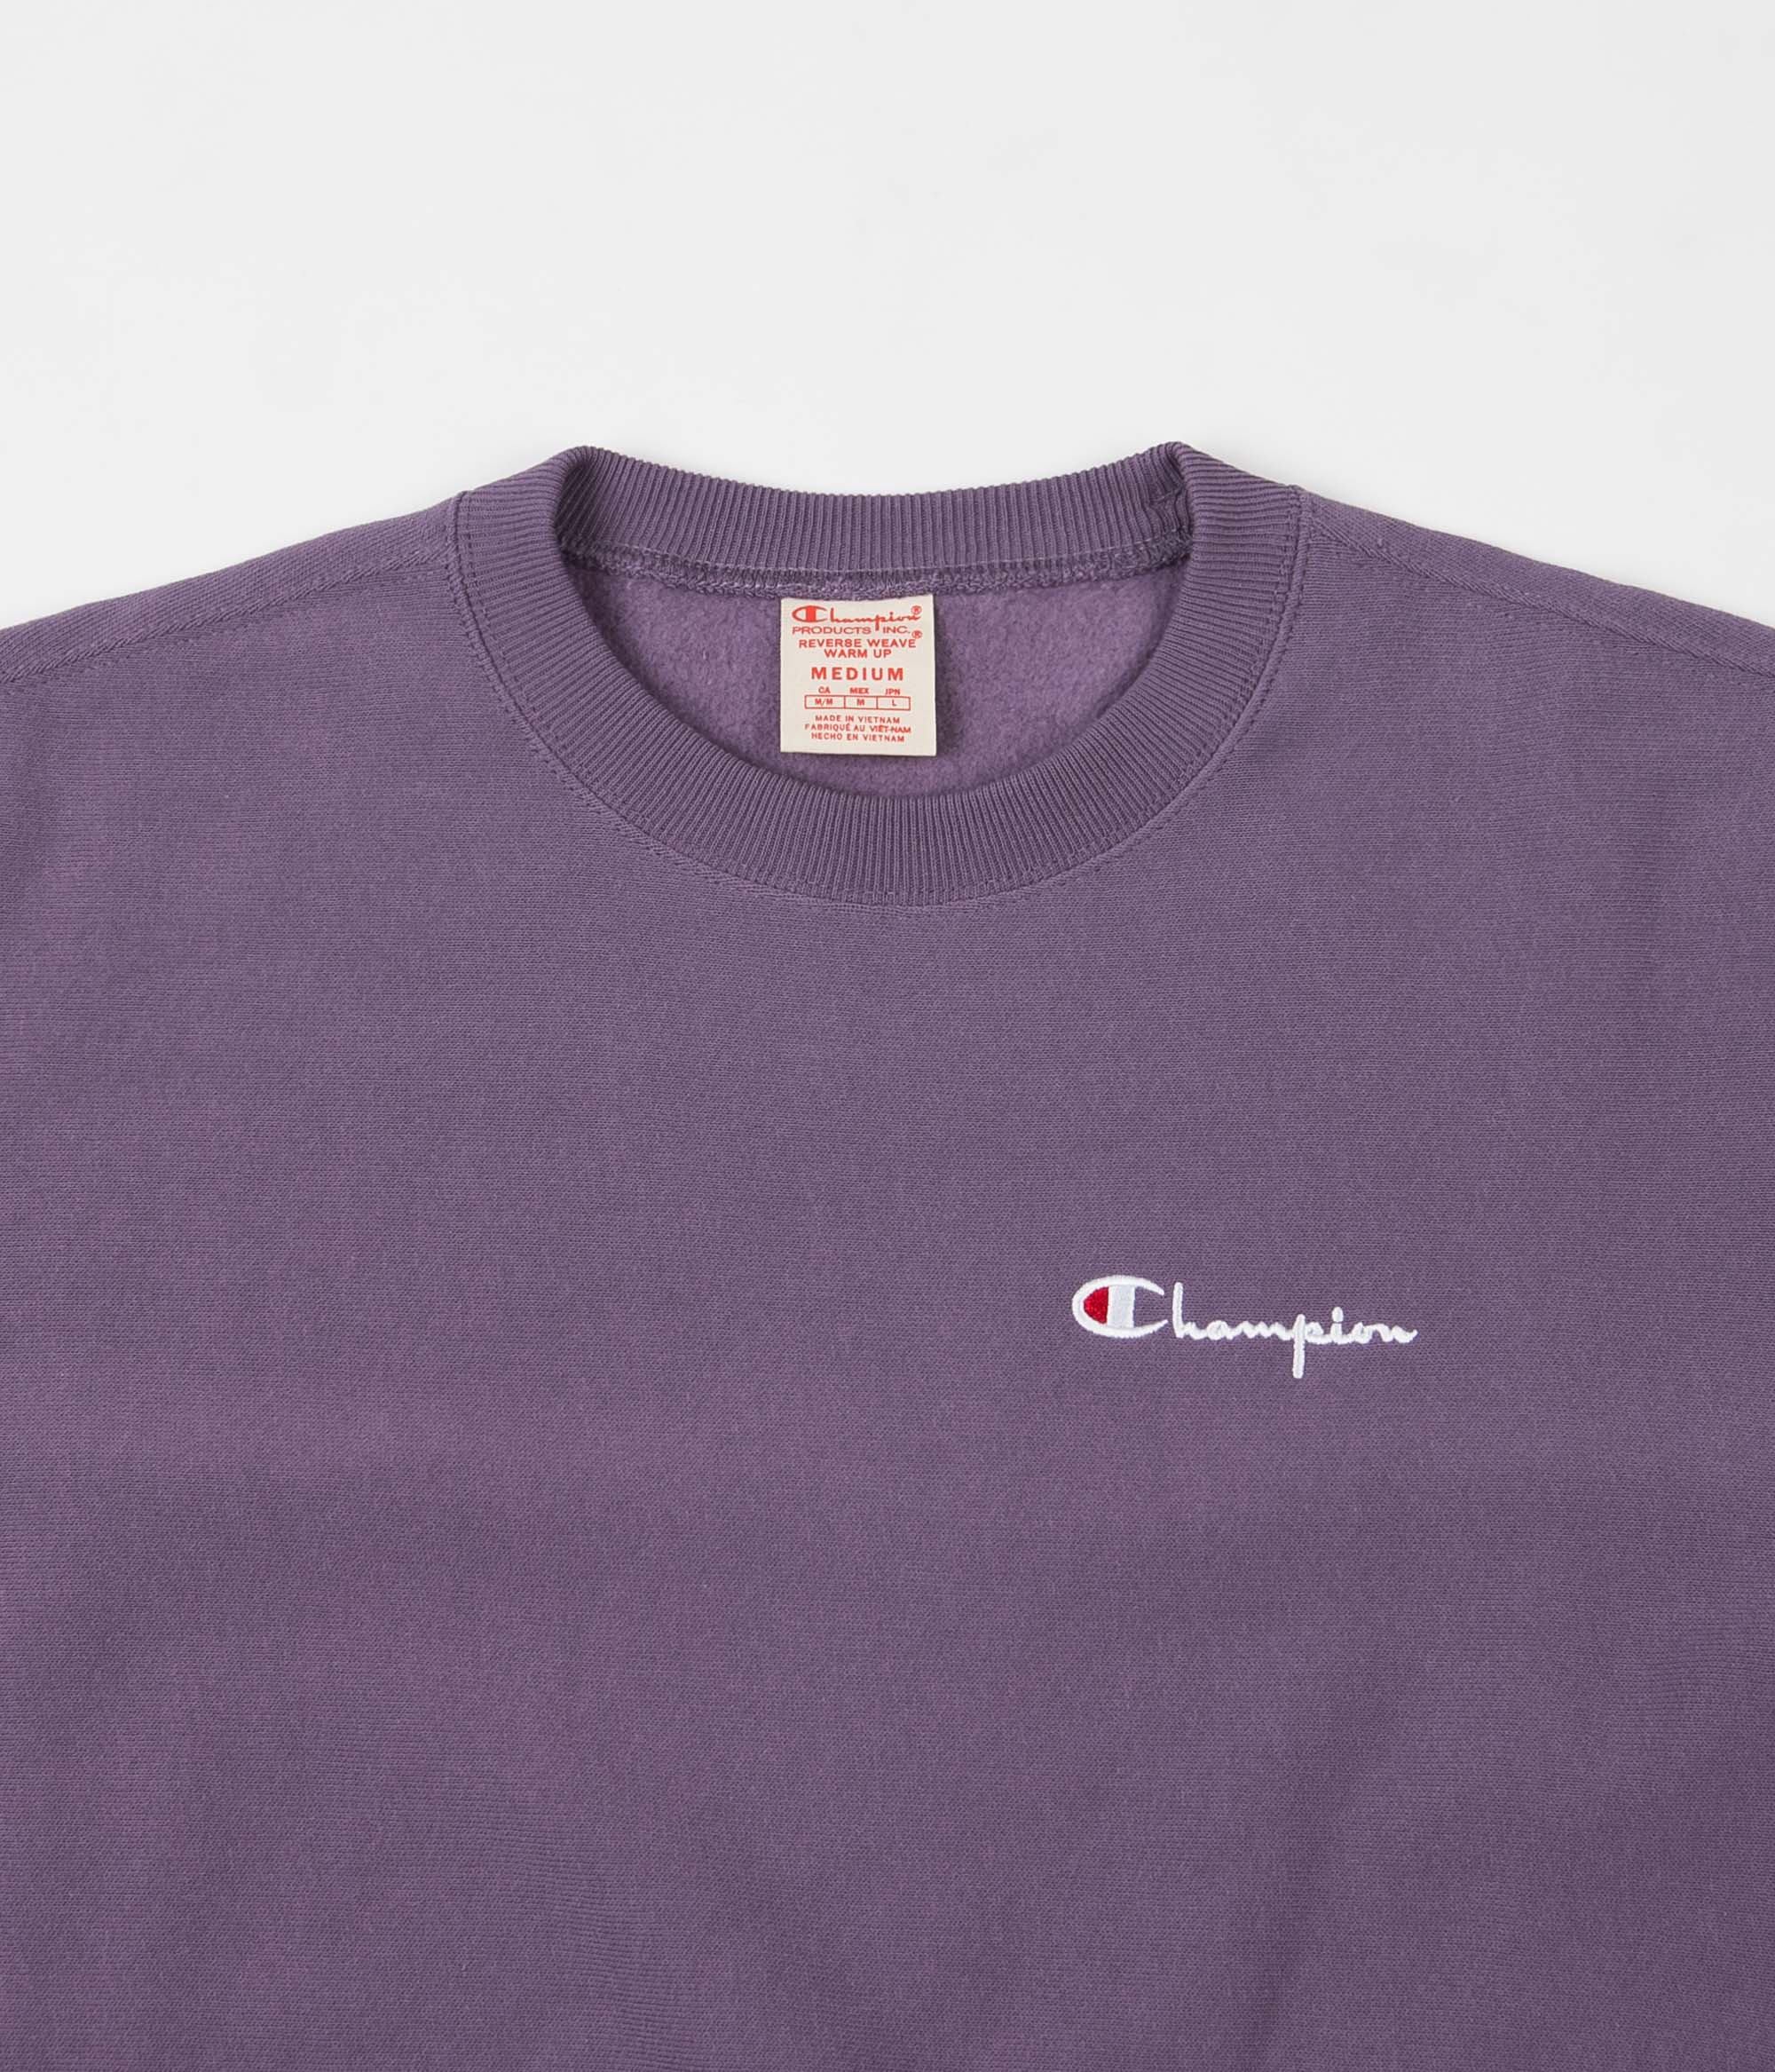 champion script logo violet crew neck sweatshirt